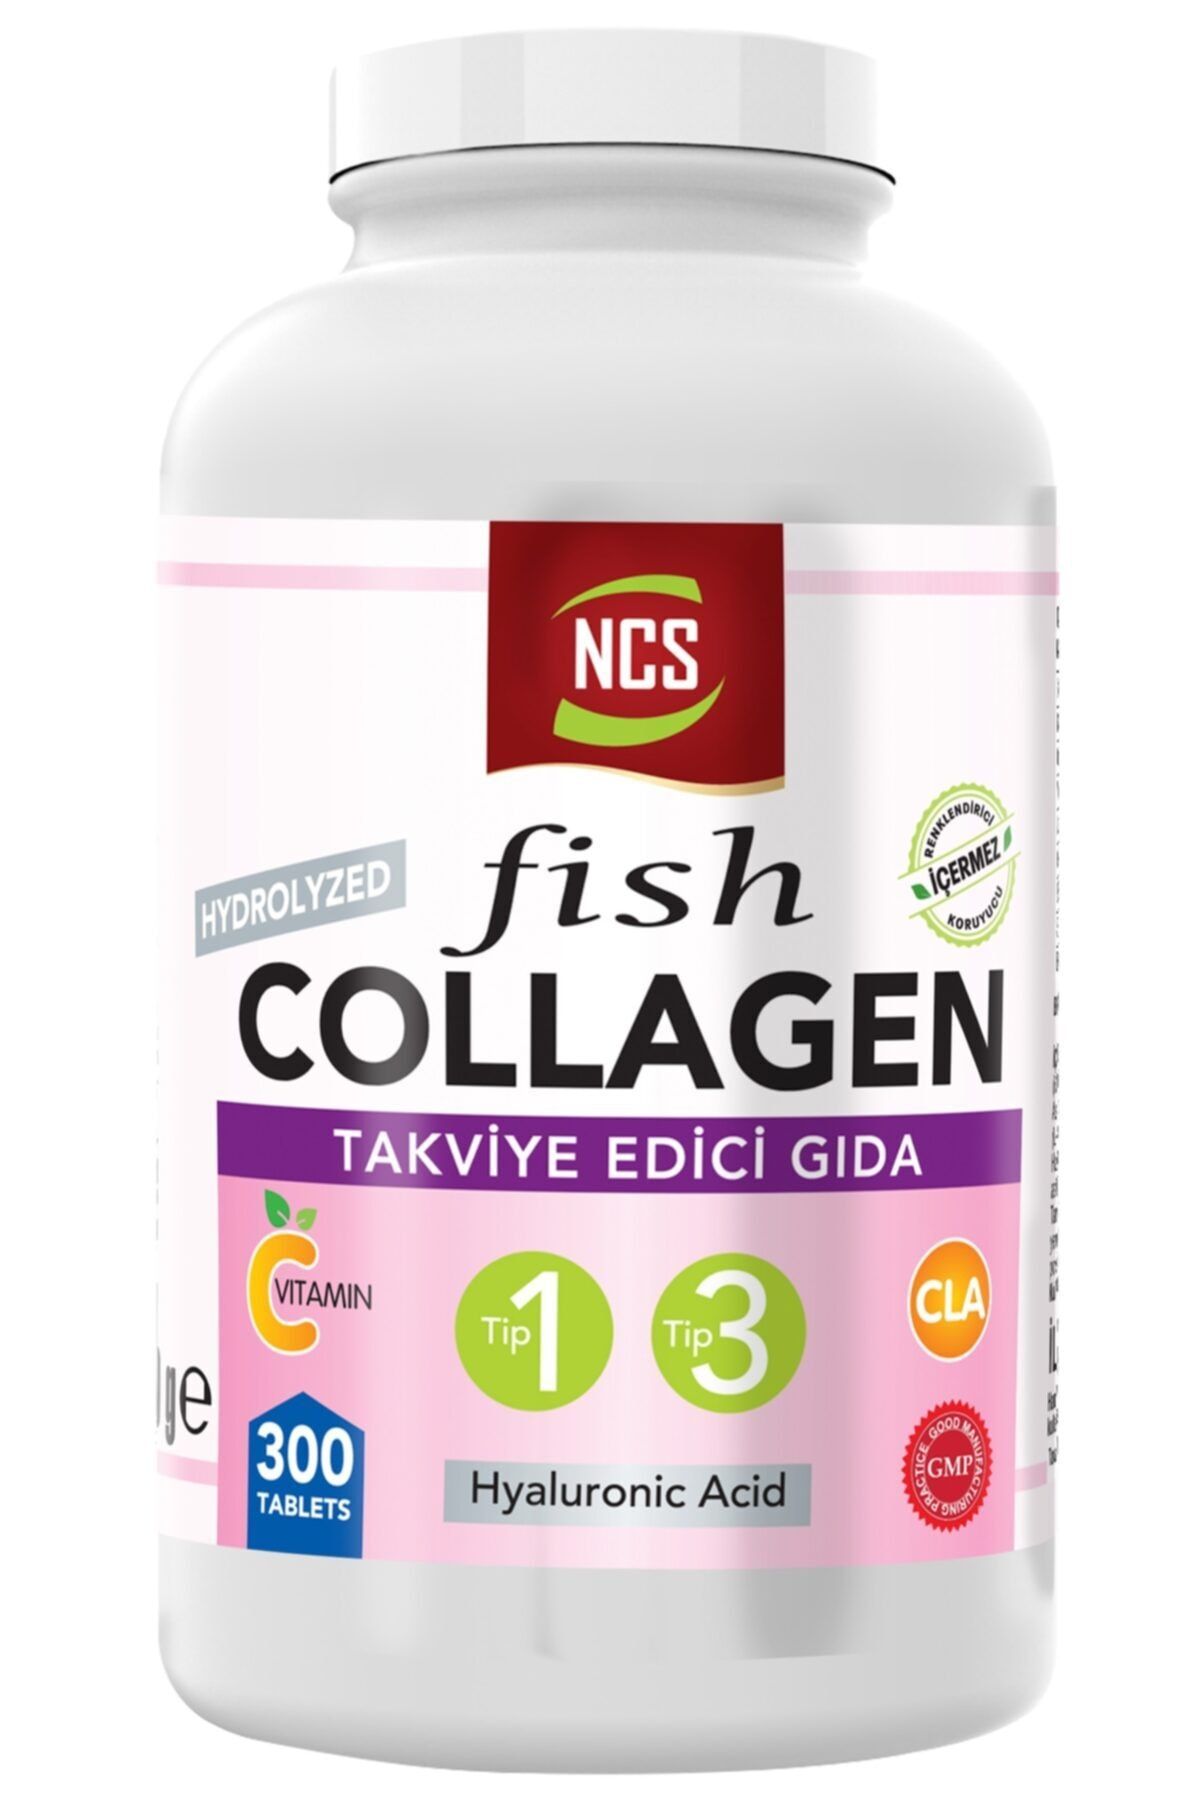 Ncs Type 1-3 Balık Kolajeni Cla Hyaluronic Acid Vitamin C 300 Tablet